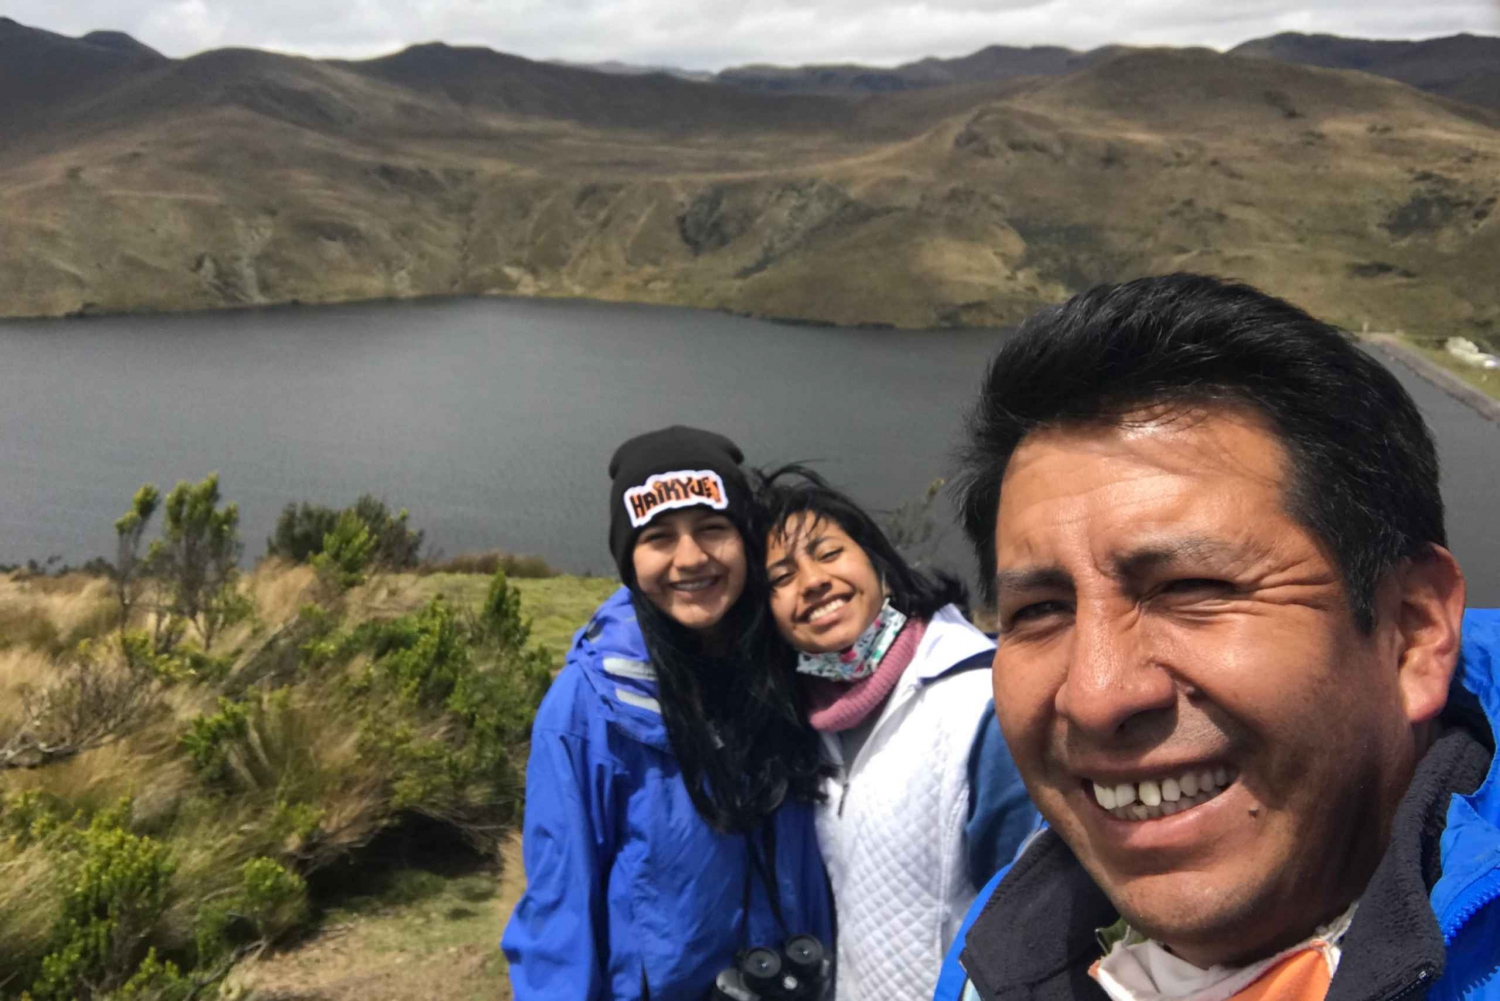 From Quito: Antizana Day Trip